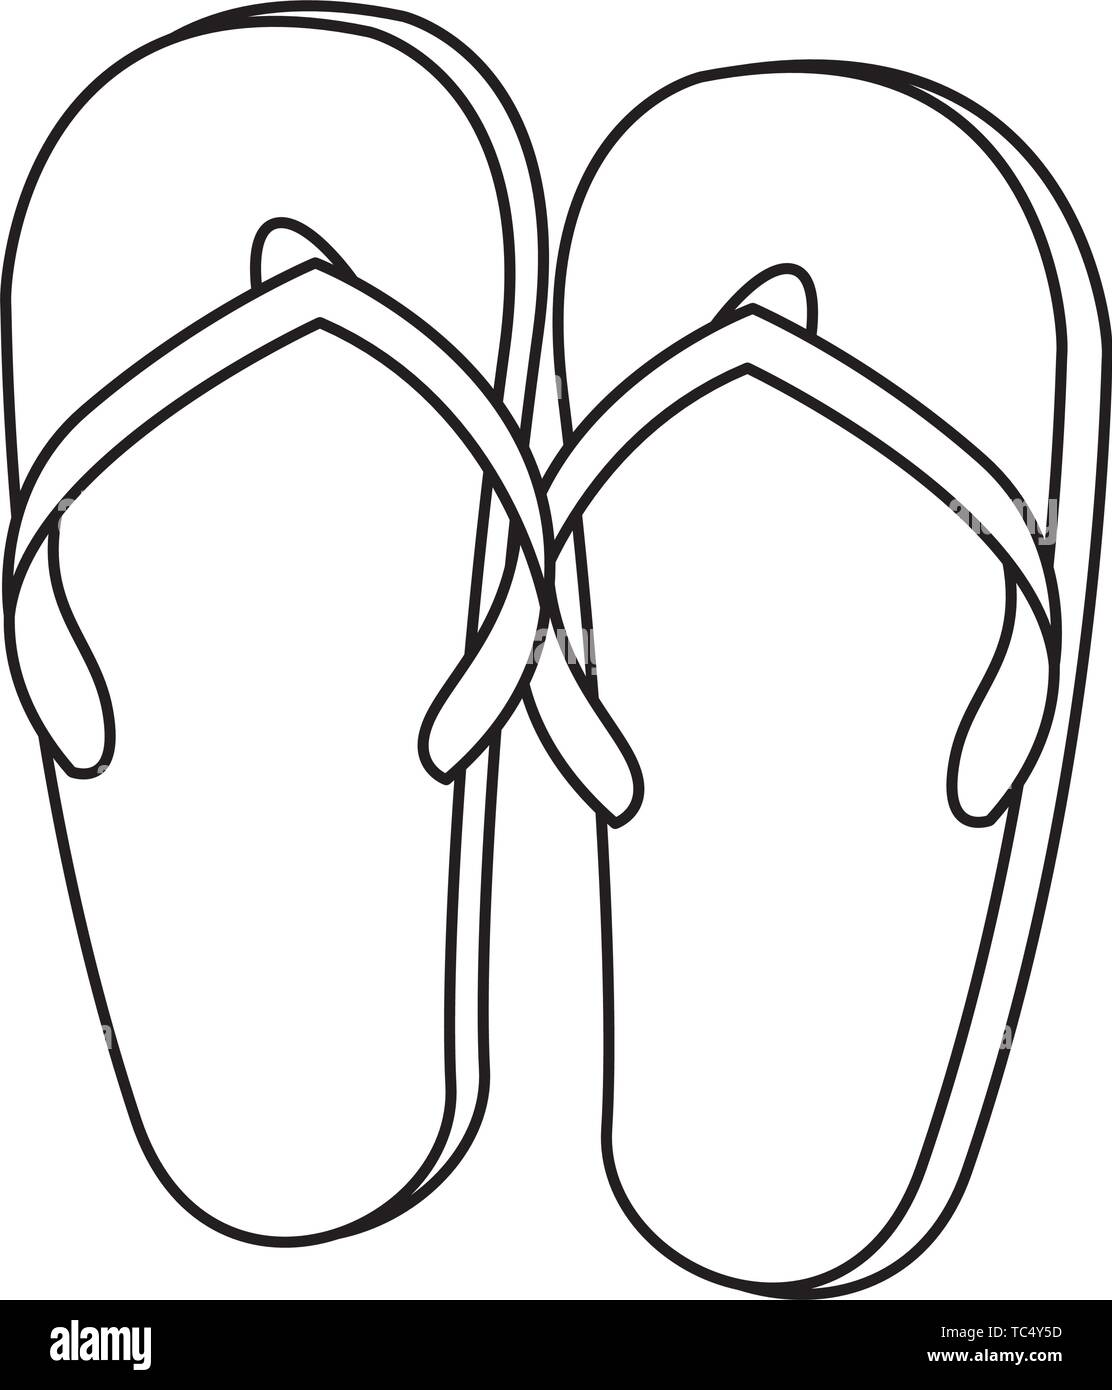 Flip flops sandals footwear cartoon in black and white Stock Vector ...